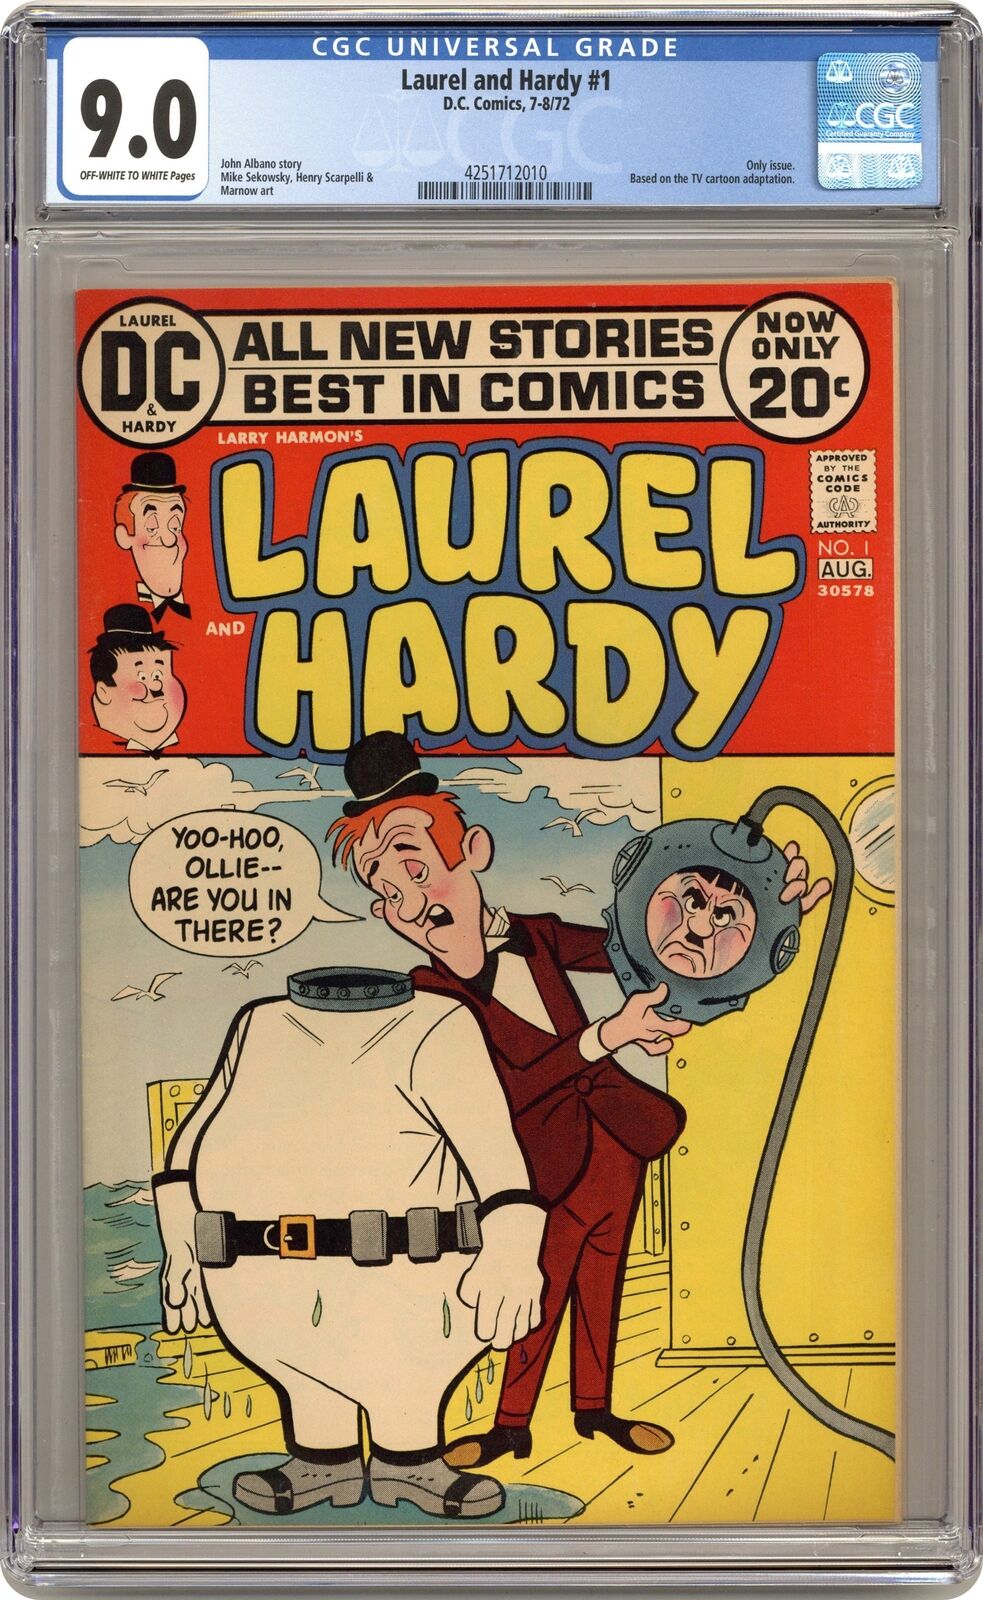 Laurel and Hardy #1 CGC 9.0 1972 4251712010